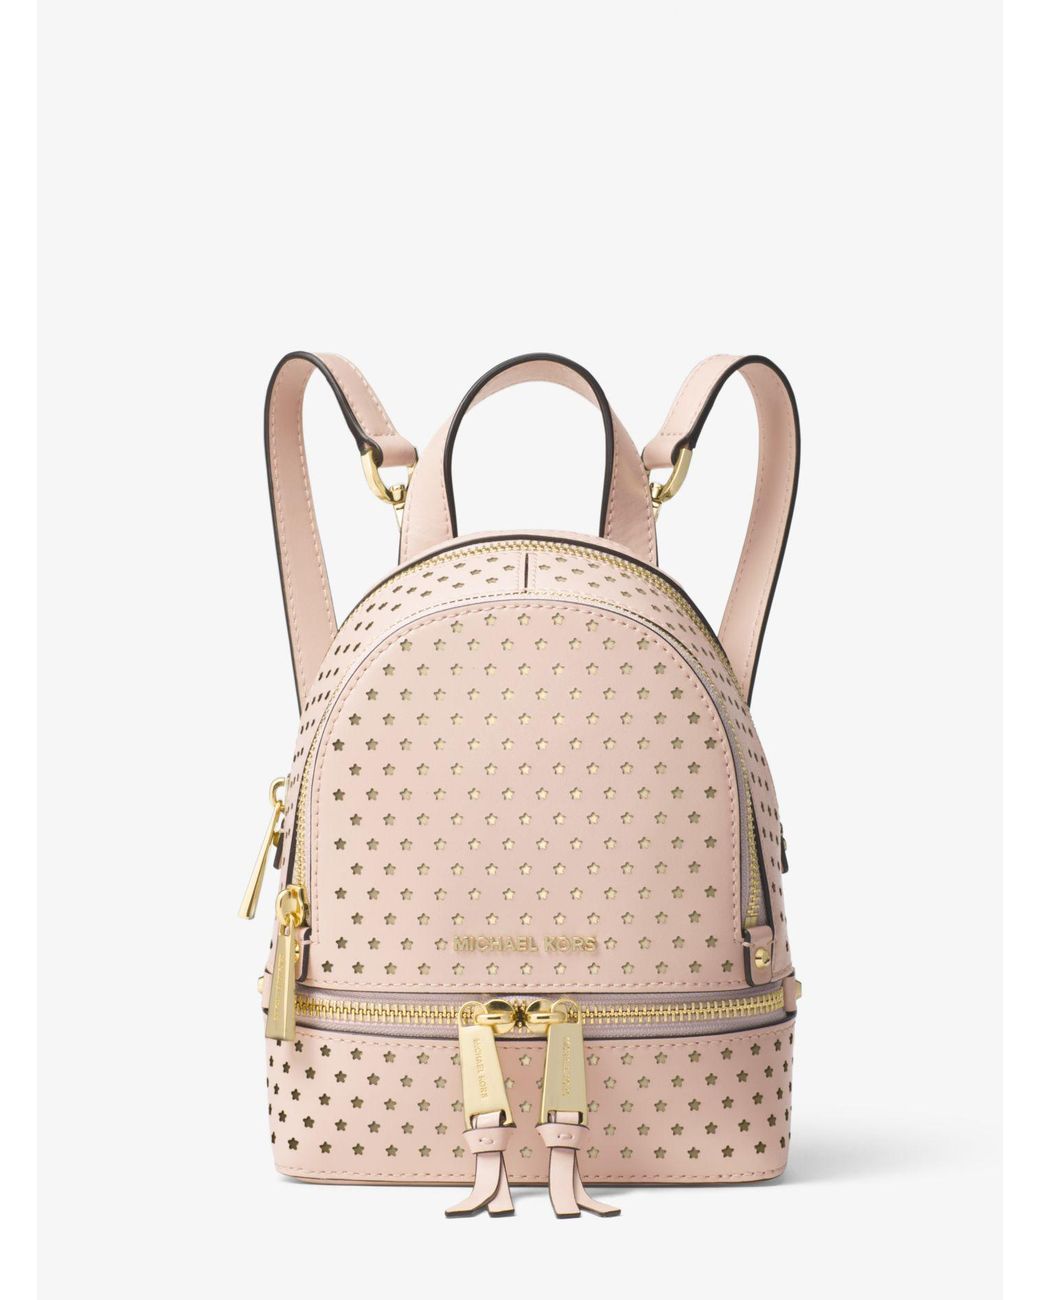 Michael Kors Mk Rhea Mini Perforated Leather Backpack in Soft Pink ...